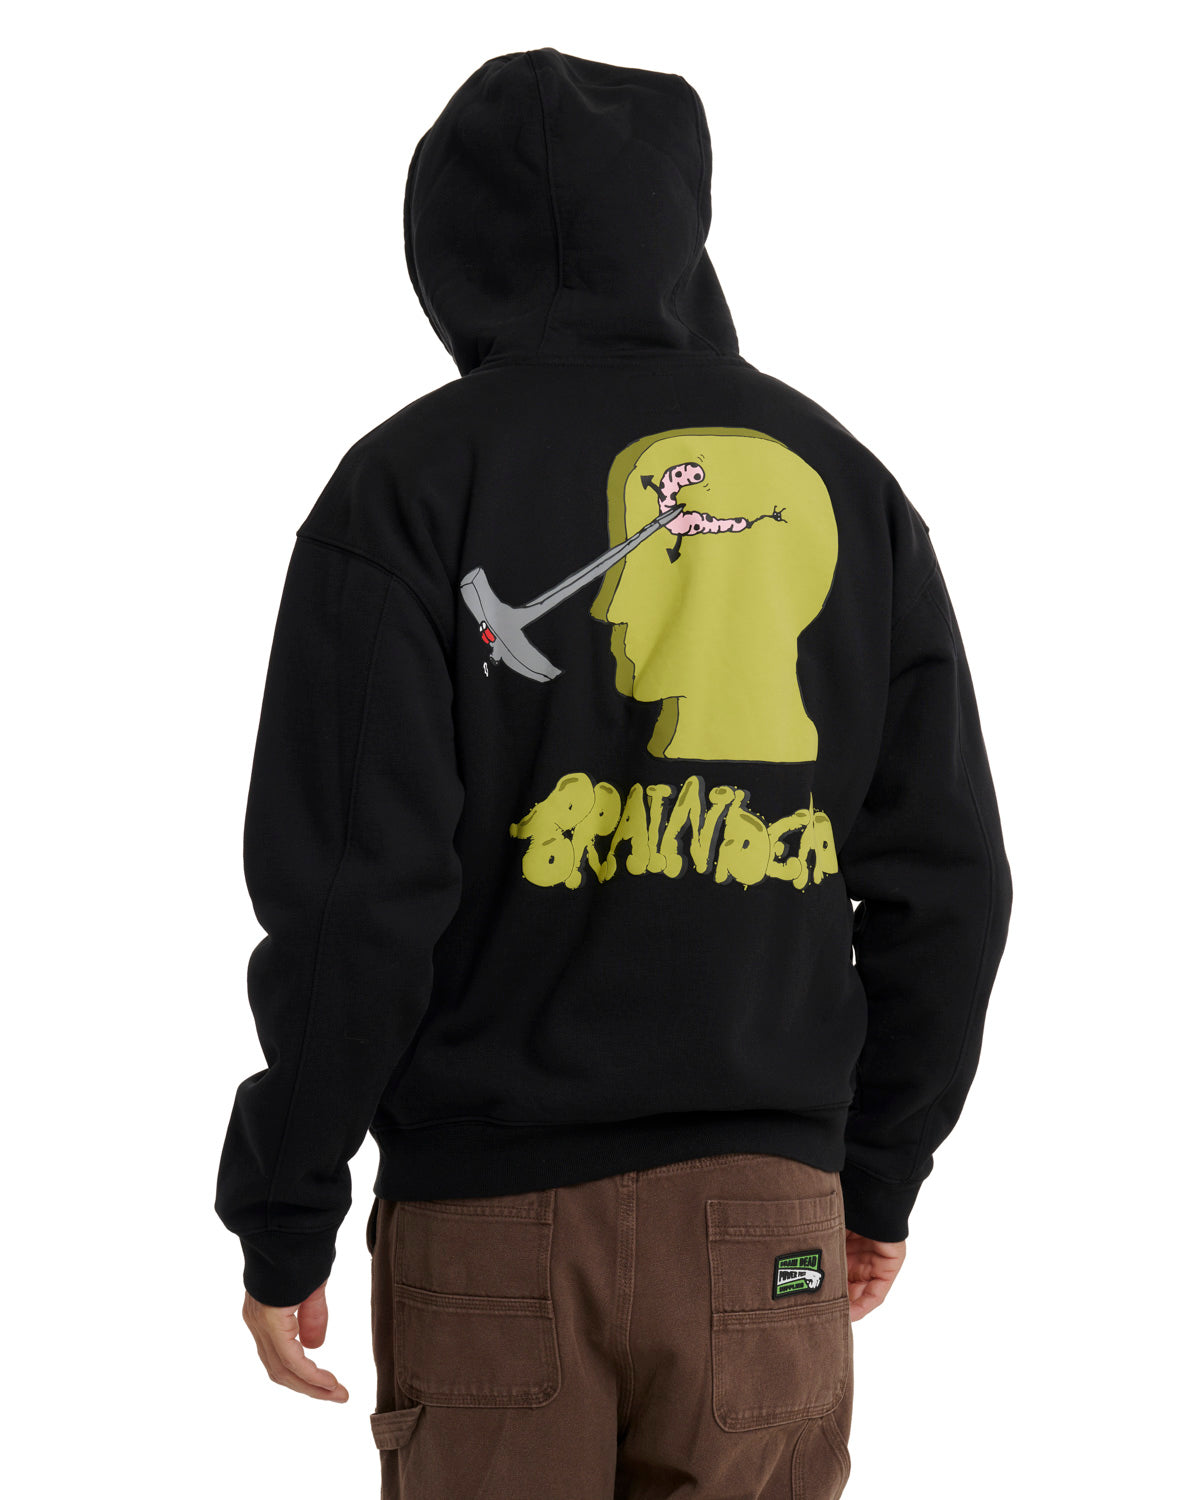 Stoned Head Zip Hooded Sweatshirt - Black